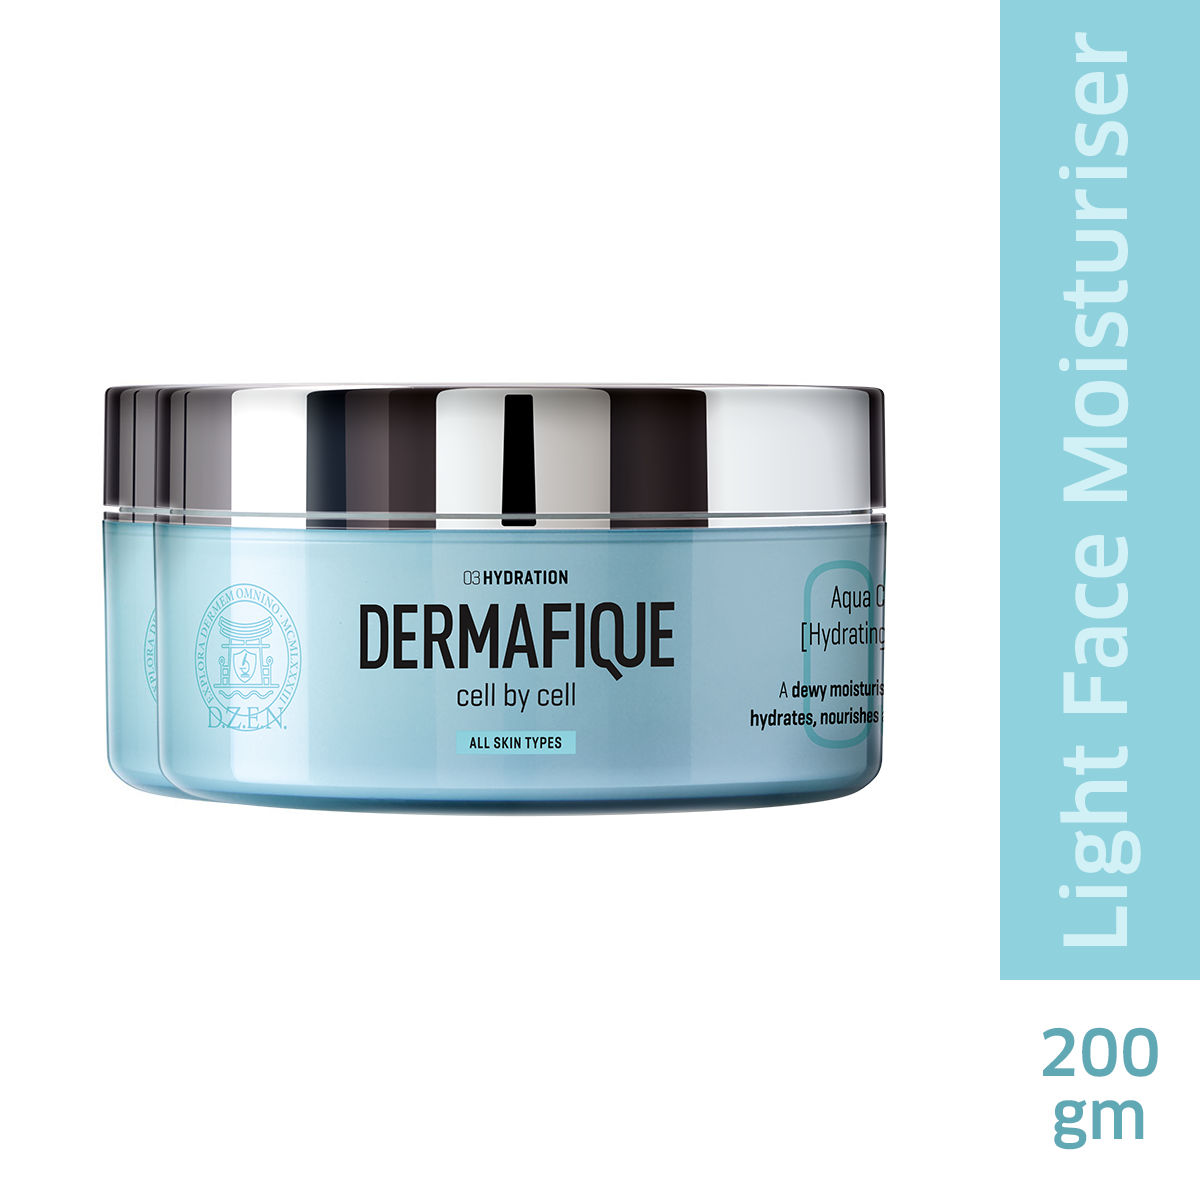 Dermafique Aqua Cloud Hydrating Creme Light Moisturizer, with Vitamin E for Soft Glowing Skin